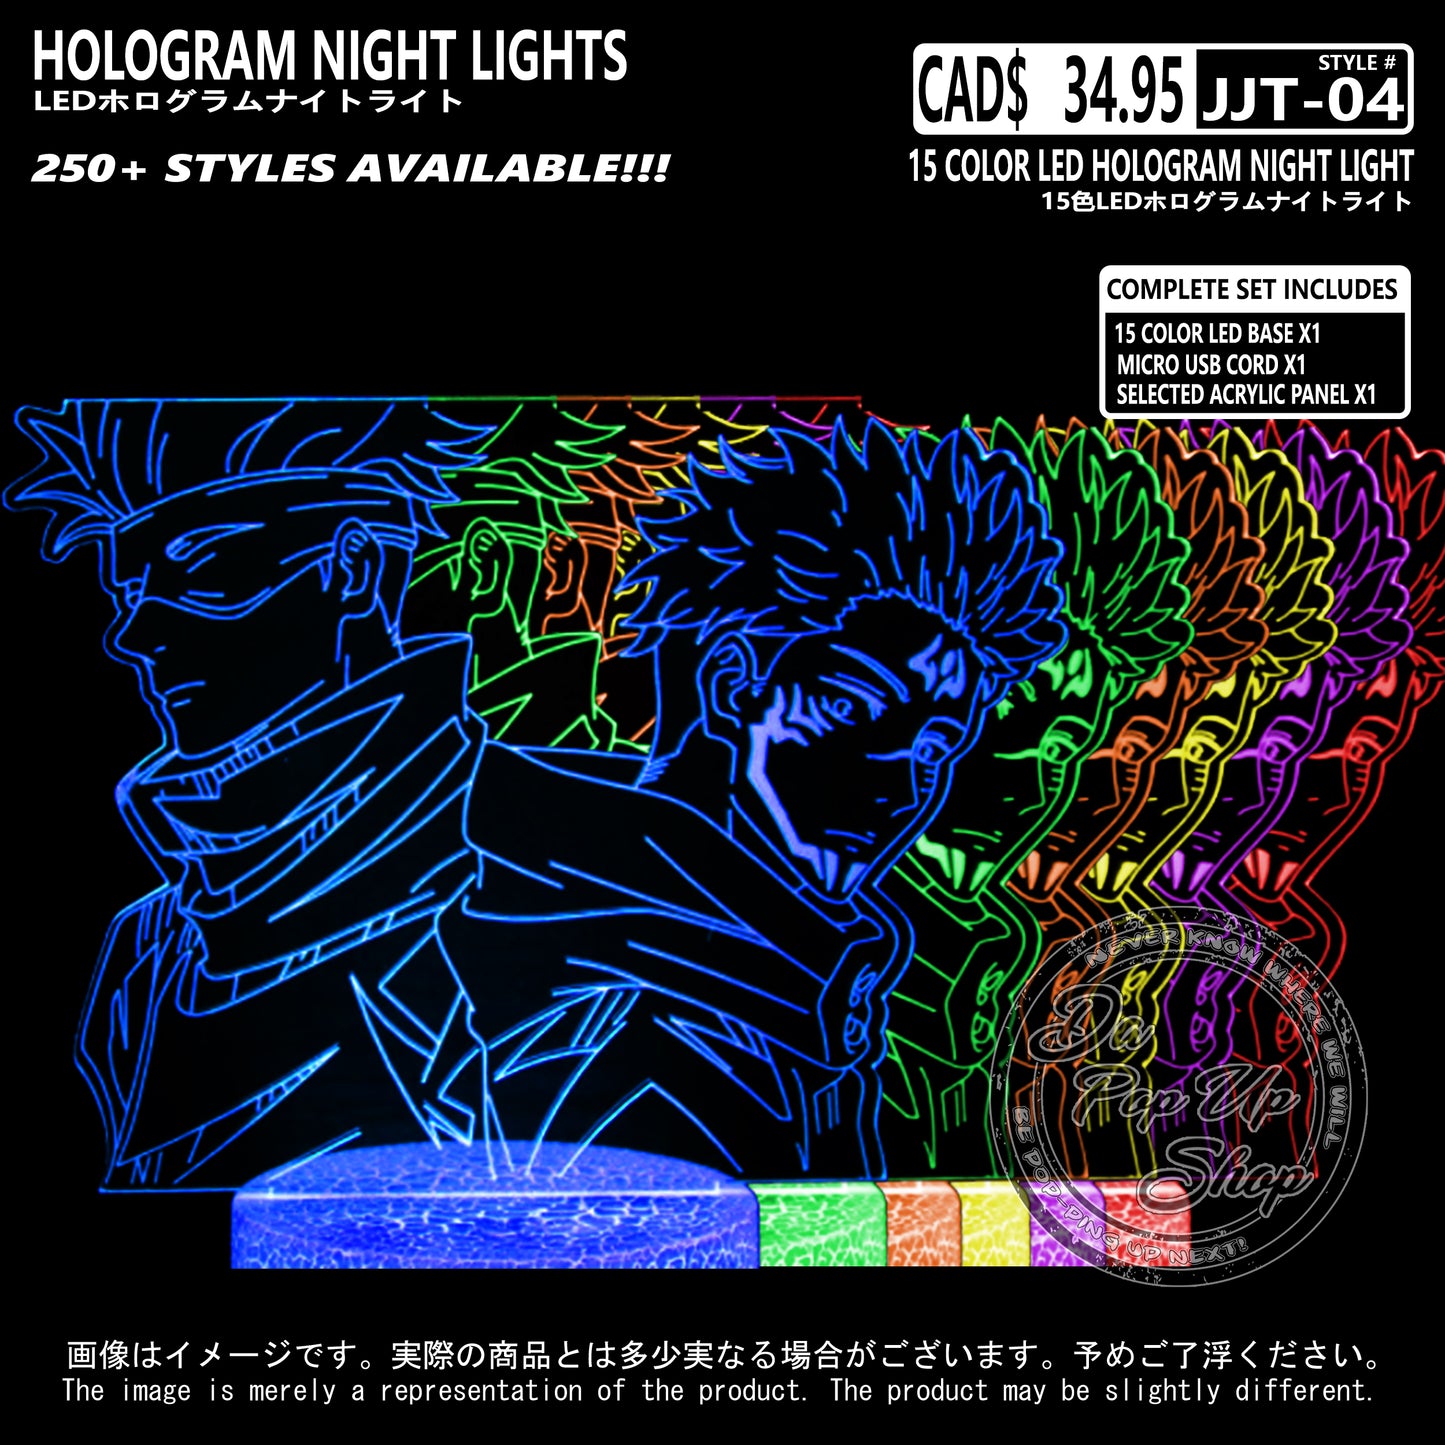 (JJT-04) Jujutsu Kaisen Hologram LED Night Light